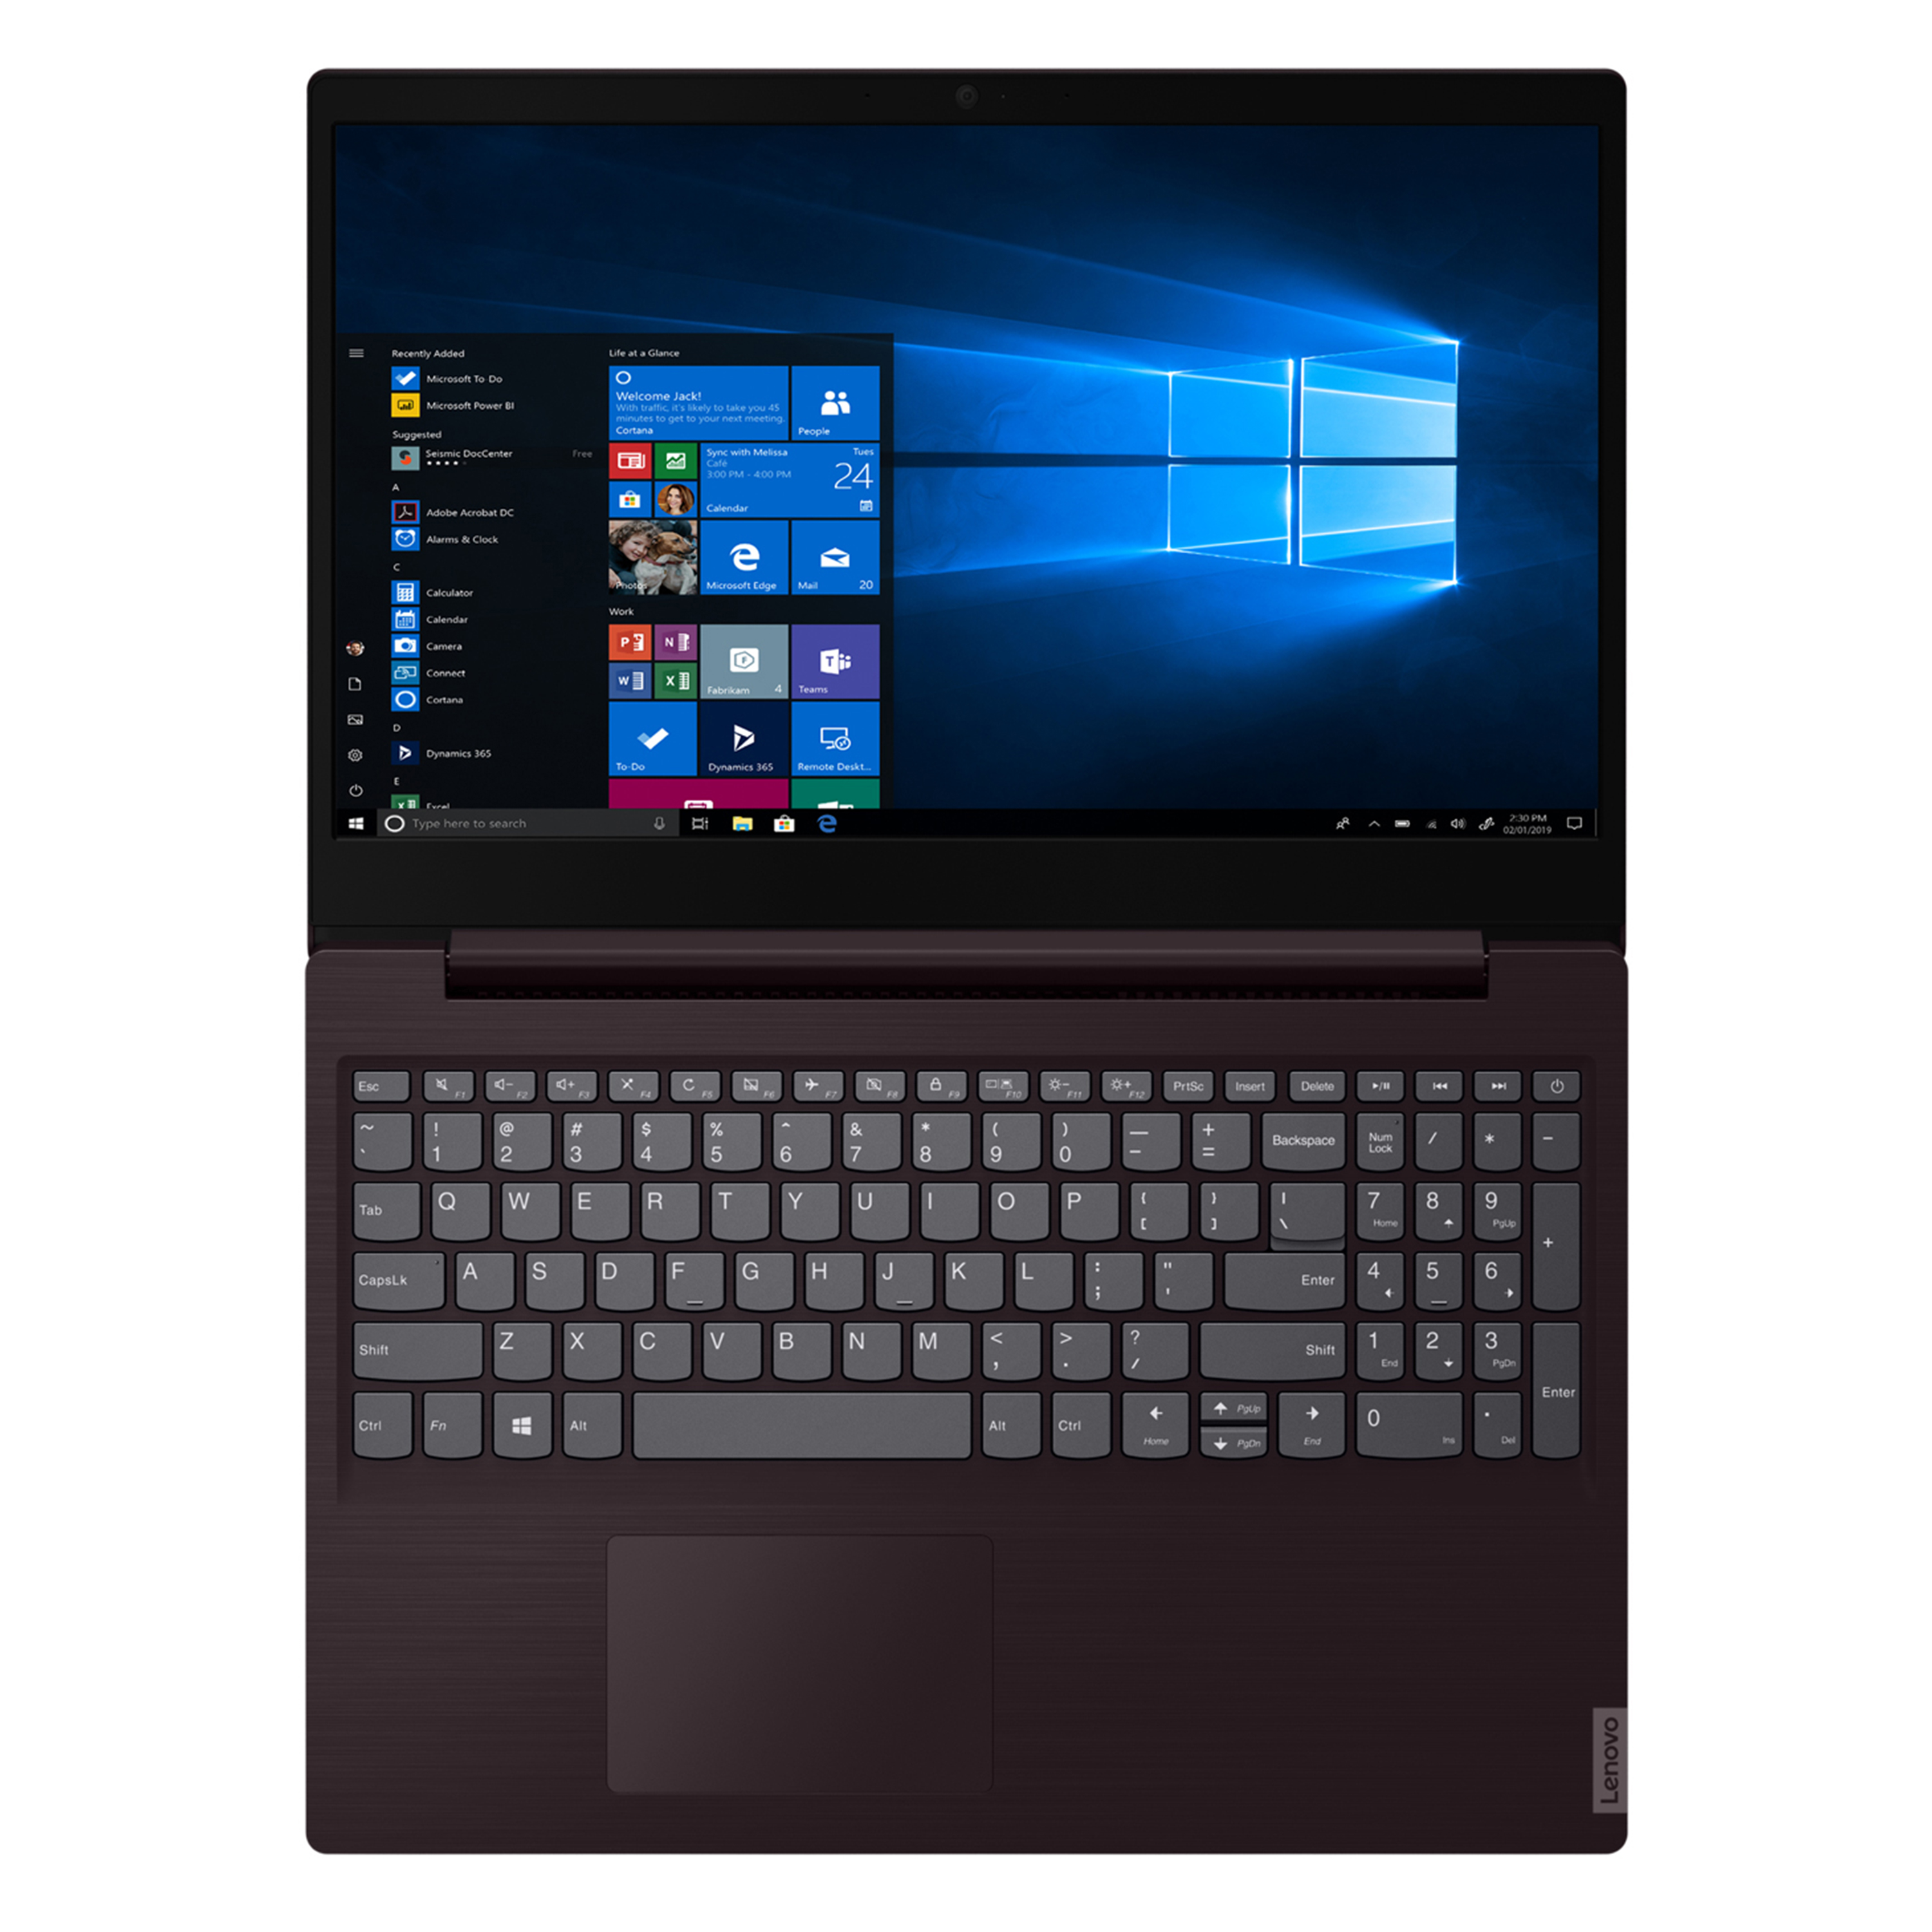 Lenovo ideapad S145 15.6" Laptop, Intel Celeron 4205U Dual-Core Processor, 4GB Memory, 128GB Solid State Drive, Windows 10 - Dark Orchid - 81MV00MAUS - image 5 of 14